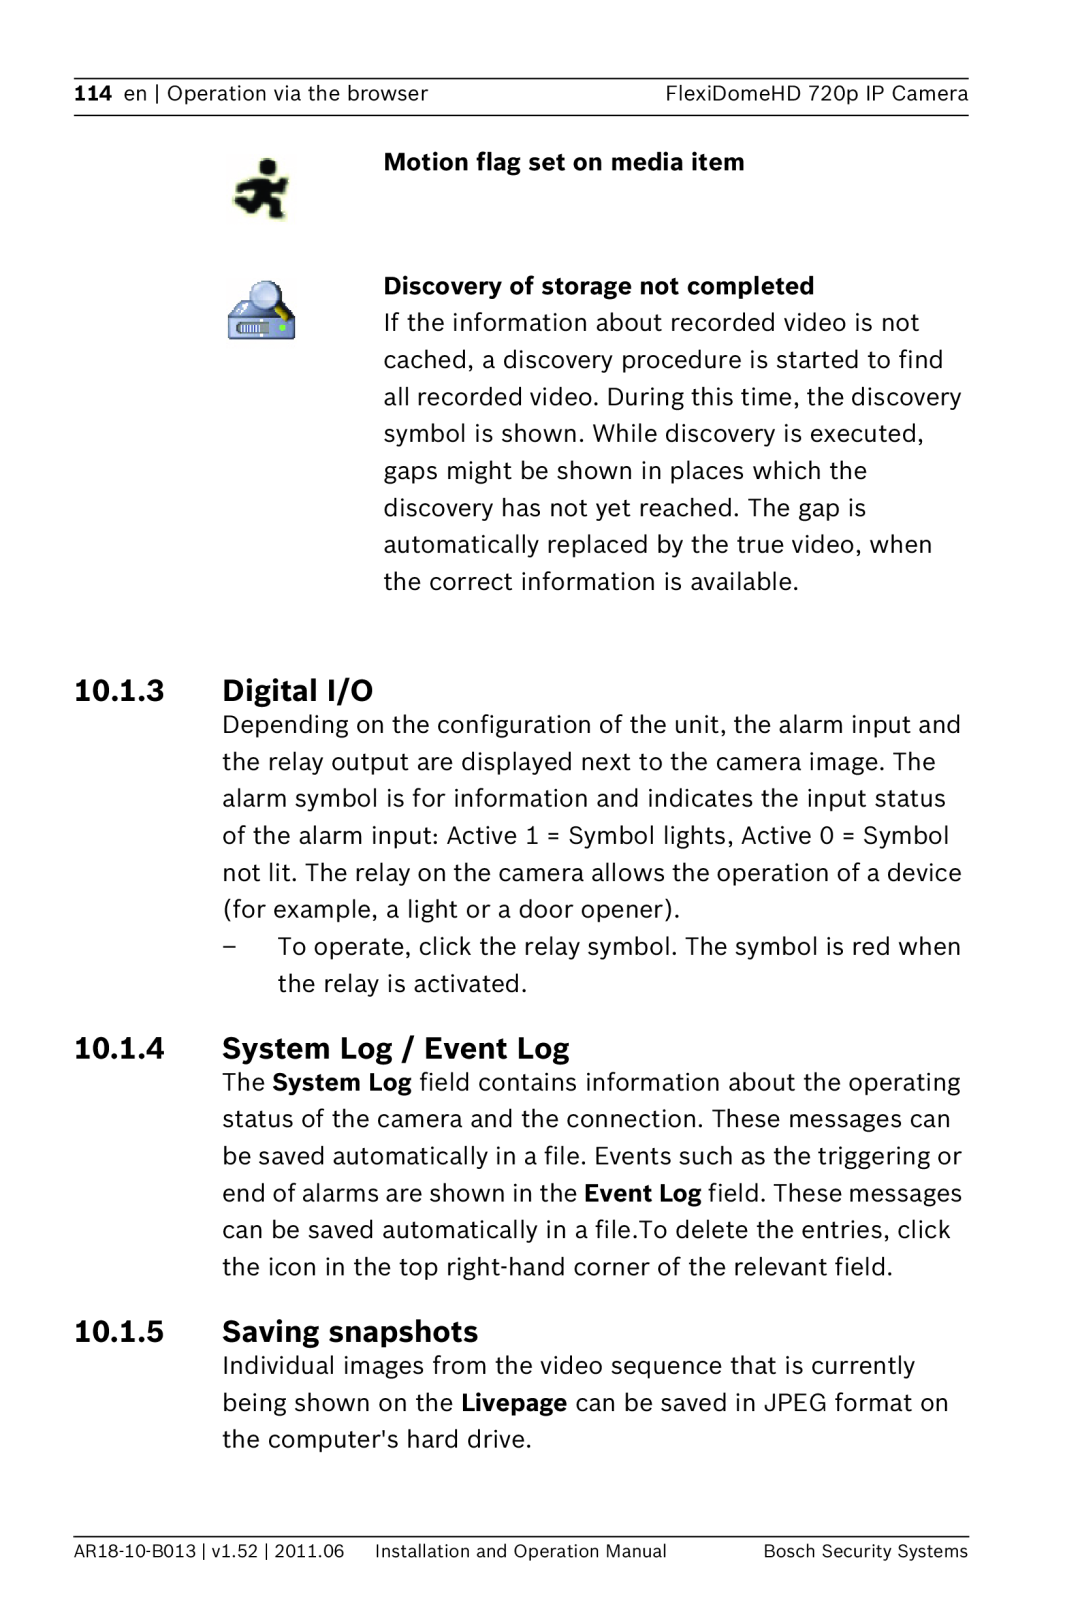 Bosch Appliances NDN-921 operation manual 10.1.3Digital I/O, 10.1.4System Log / Event Log, 10.1.5Saving snapshots 